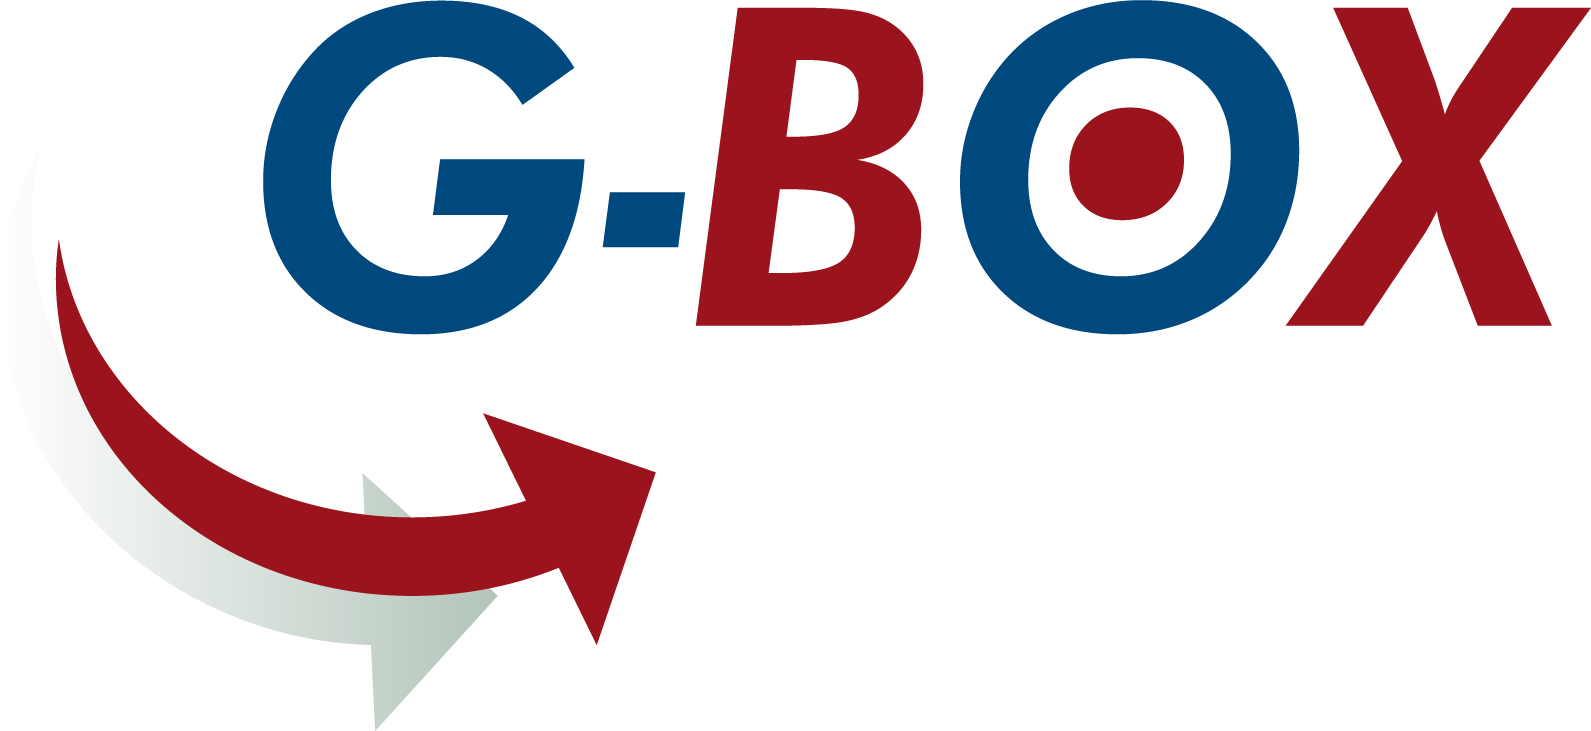 Special G-BOX management software developments